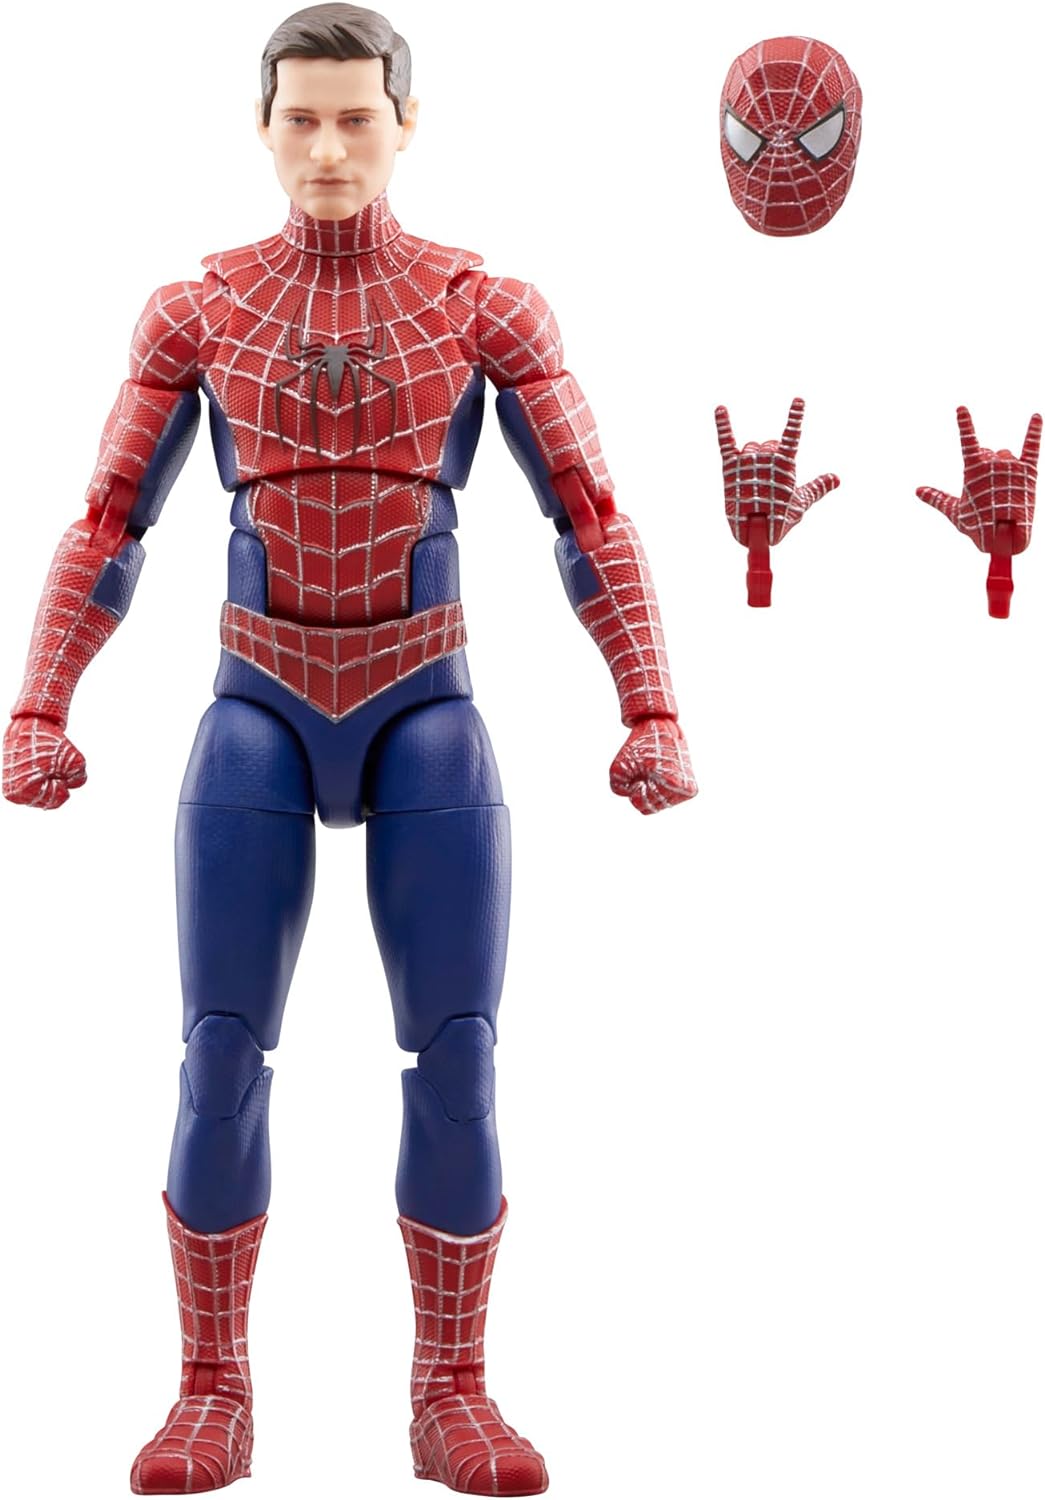 Marvel Legends Spider-Man NWH Friendly Neighborhood Spider-Man 6-Inch Action Figure画像